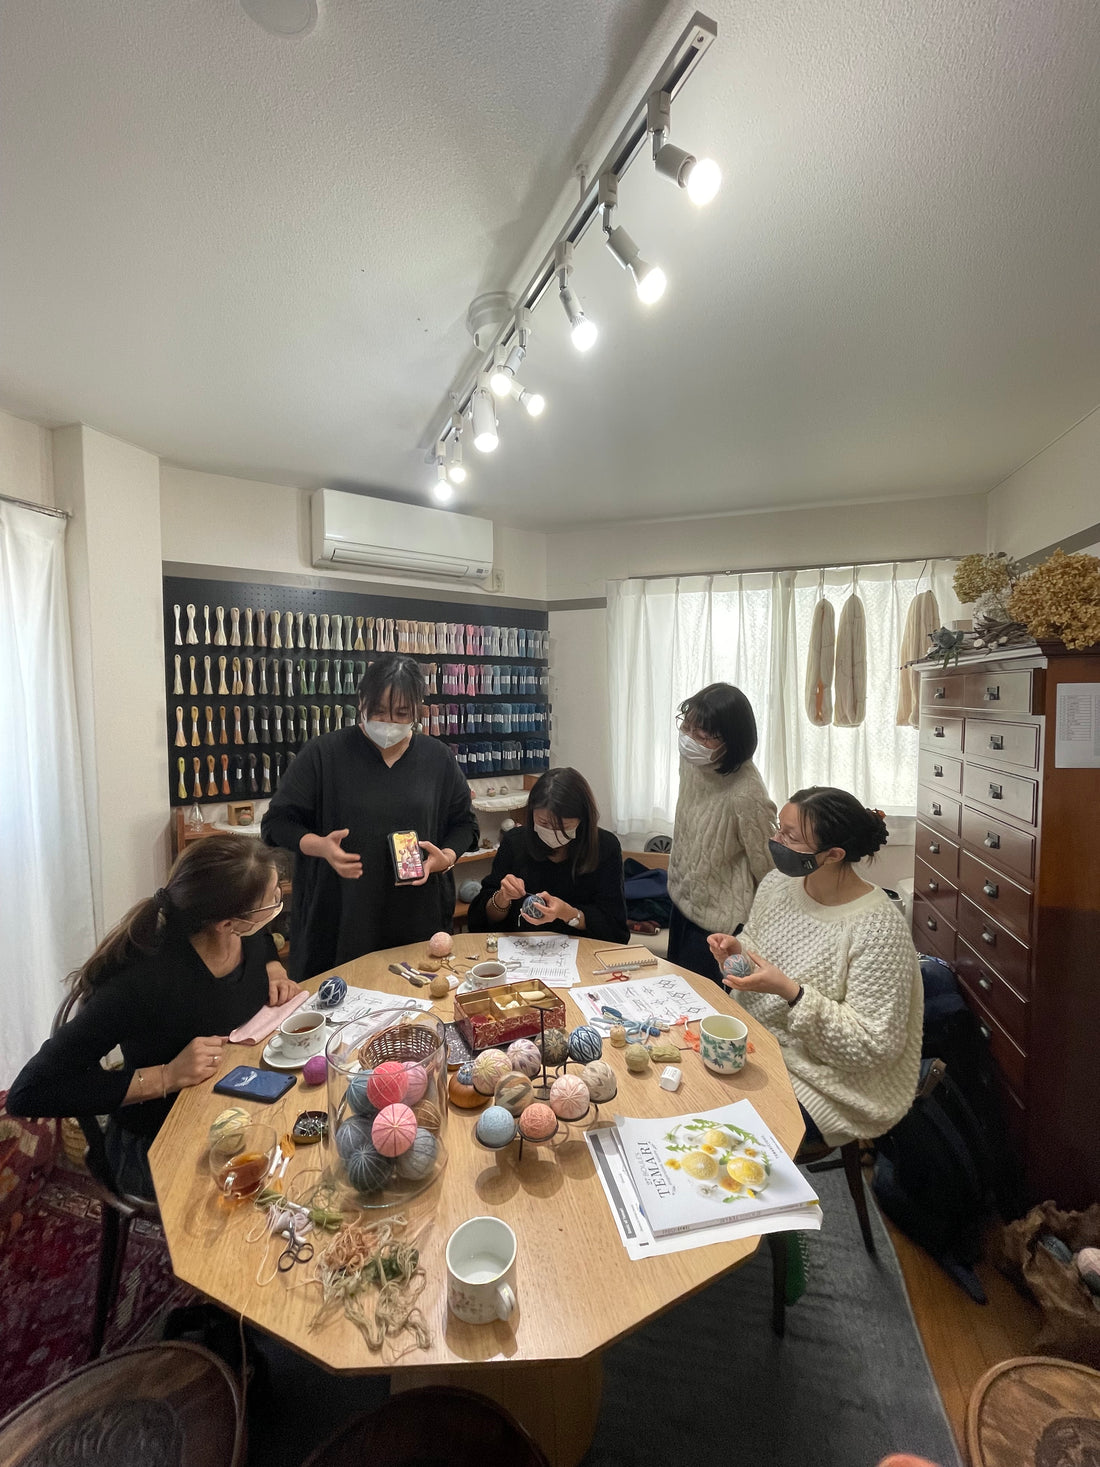 Experience a Japanese culture, hand craft? Temari Workshop in Tokyo, Japan